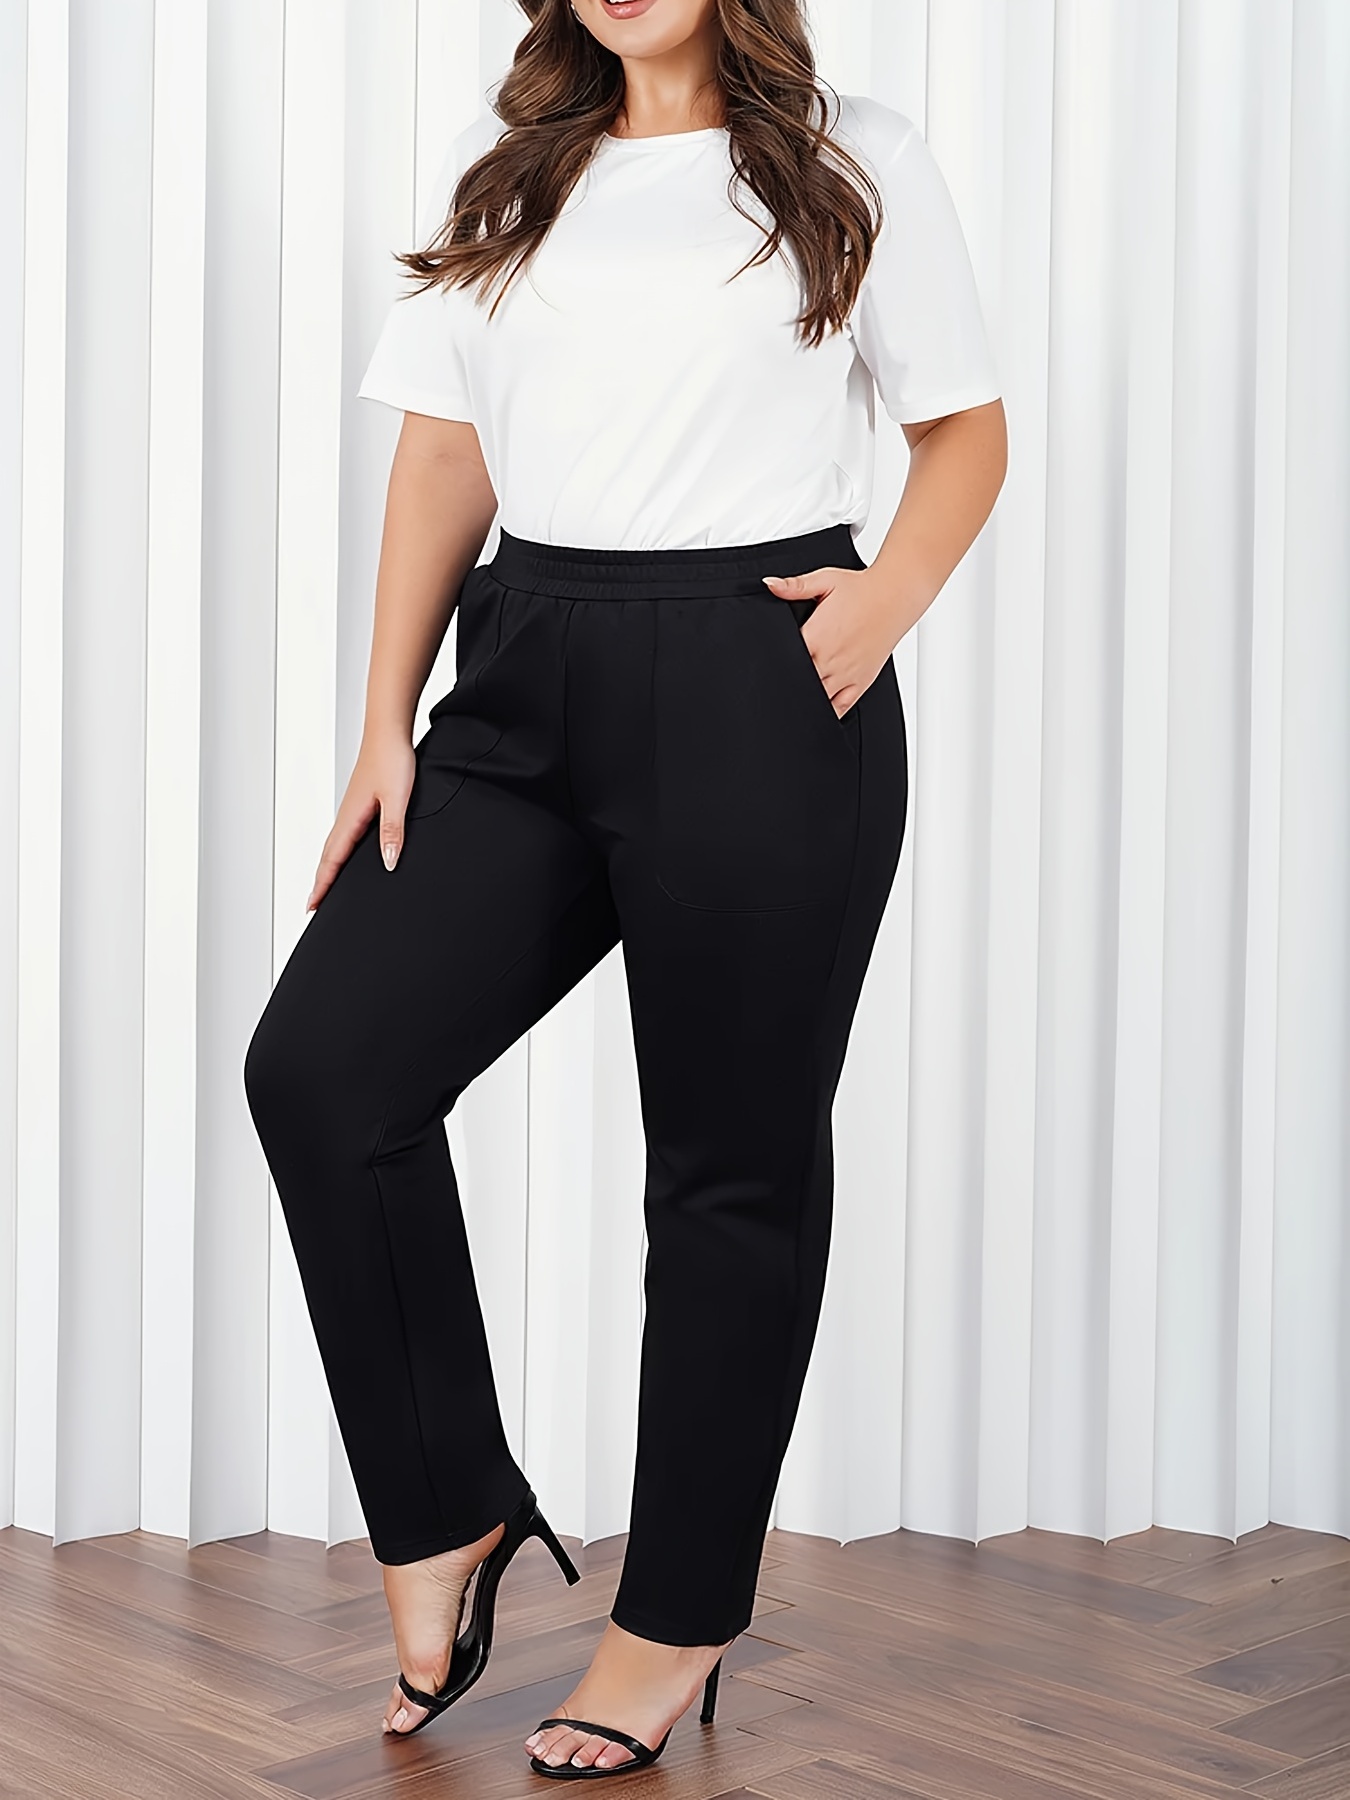 Buy Dark Green Solid Women Plus Size Slim Pants Online - W for Woman